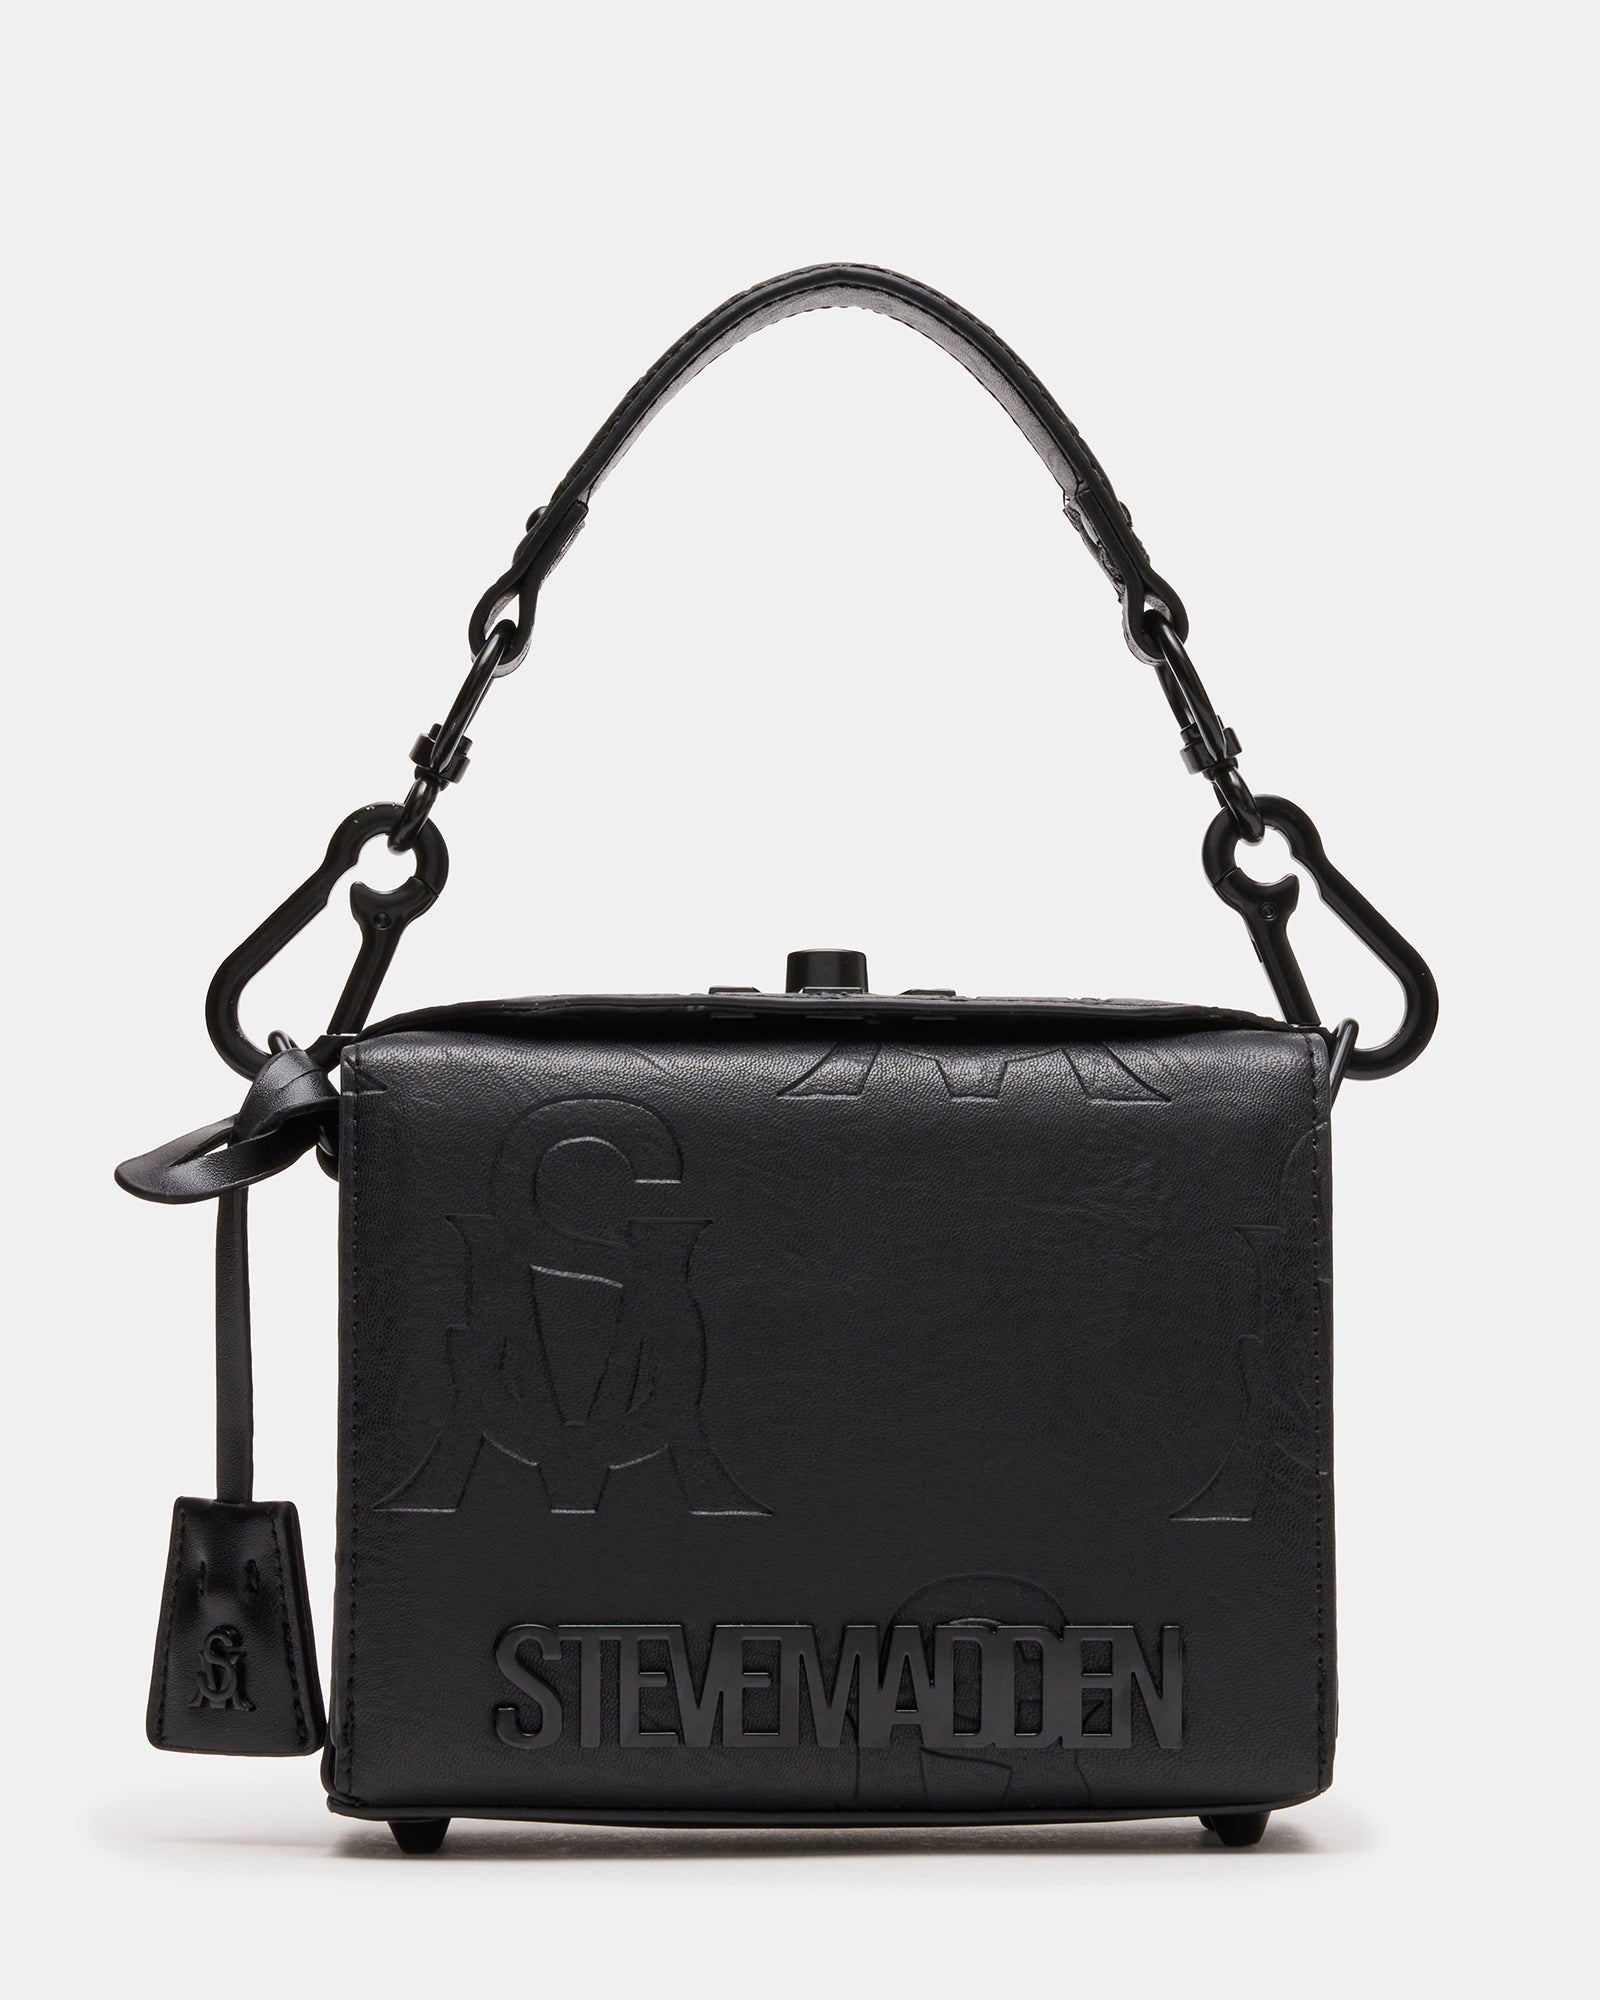 All Women's Handbags | Crossbody & Shoulder Bags, Clutches & Belt